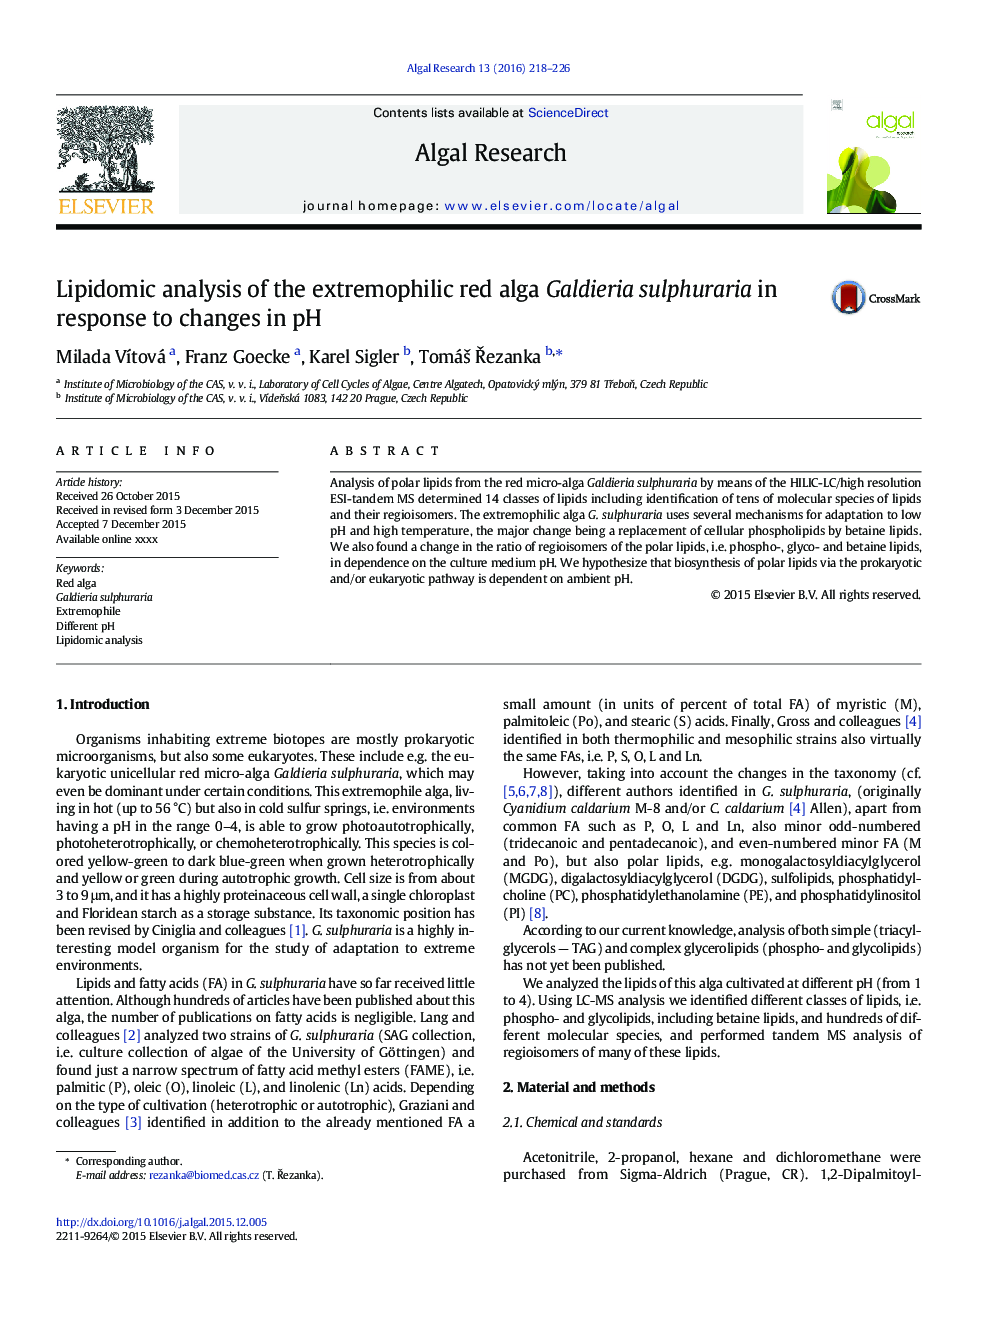 Lipidomic analysis of the extremophilic red alga Galdieria sulphuraria in response to changes in pH